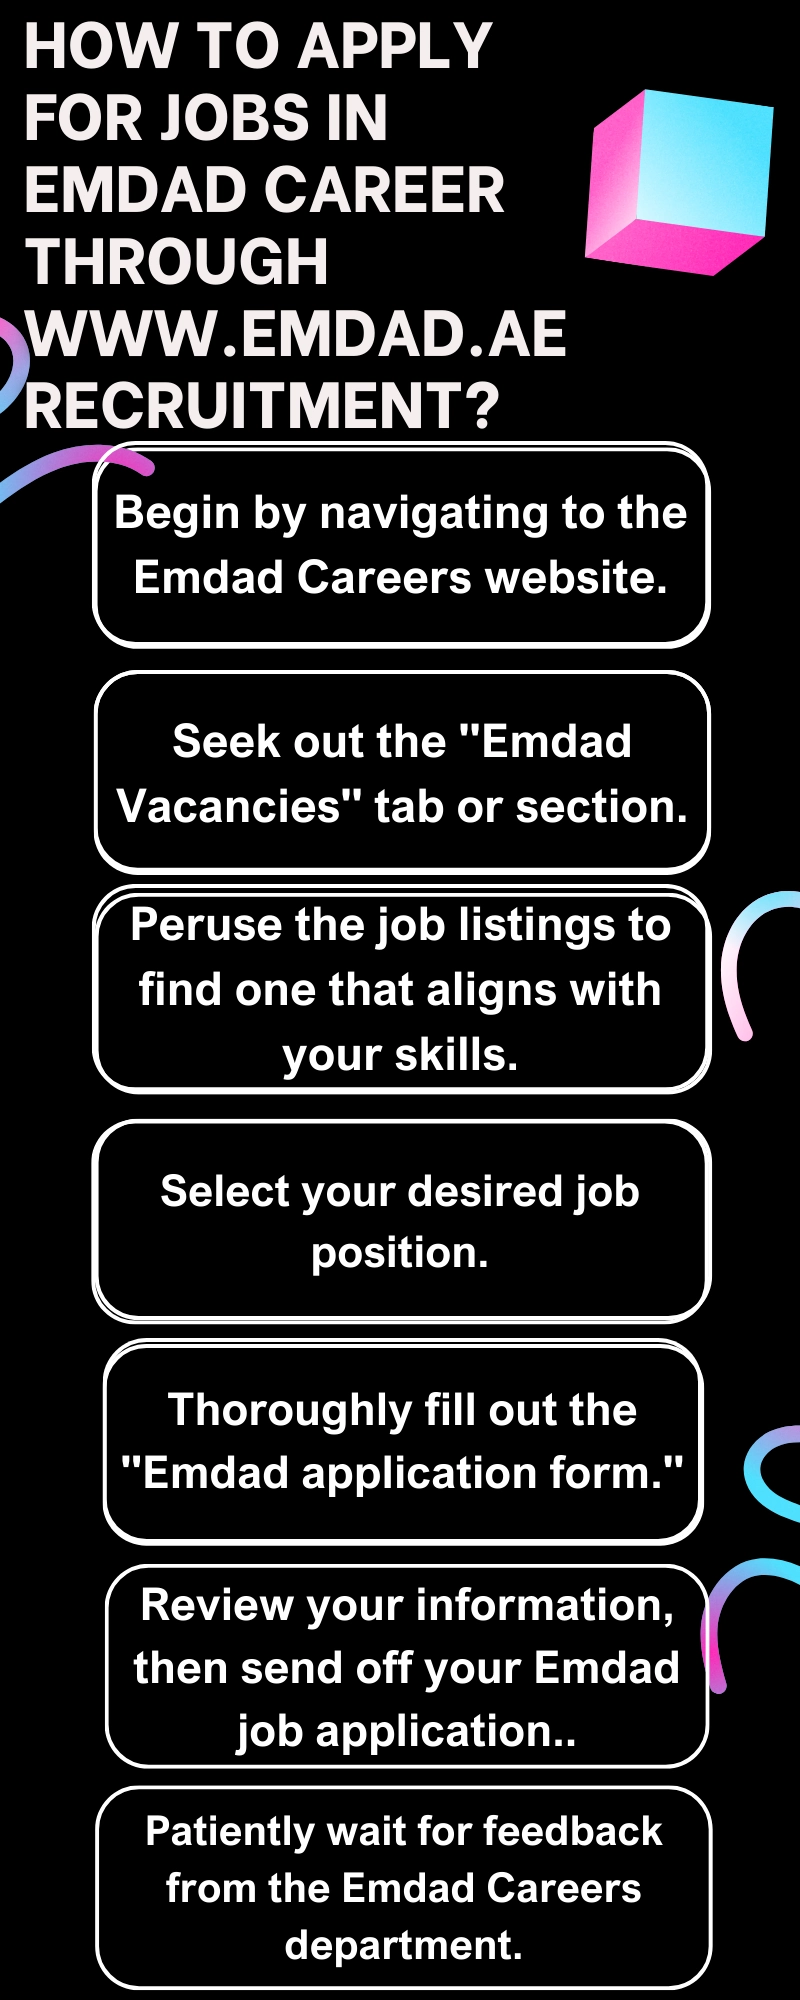 How to Apply for Jobs in Emdad Career through www.emdad.ae recruitment_